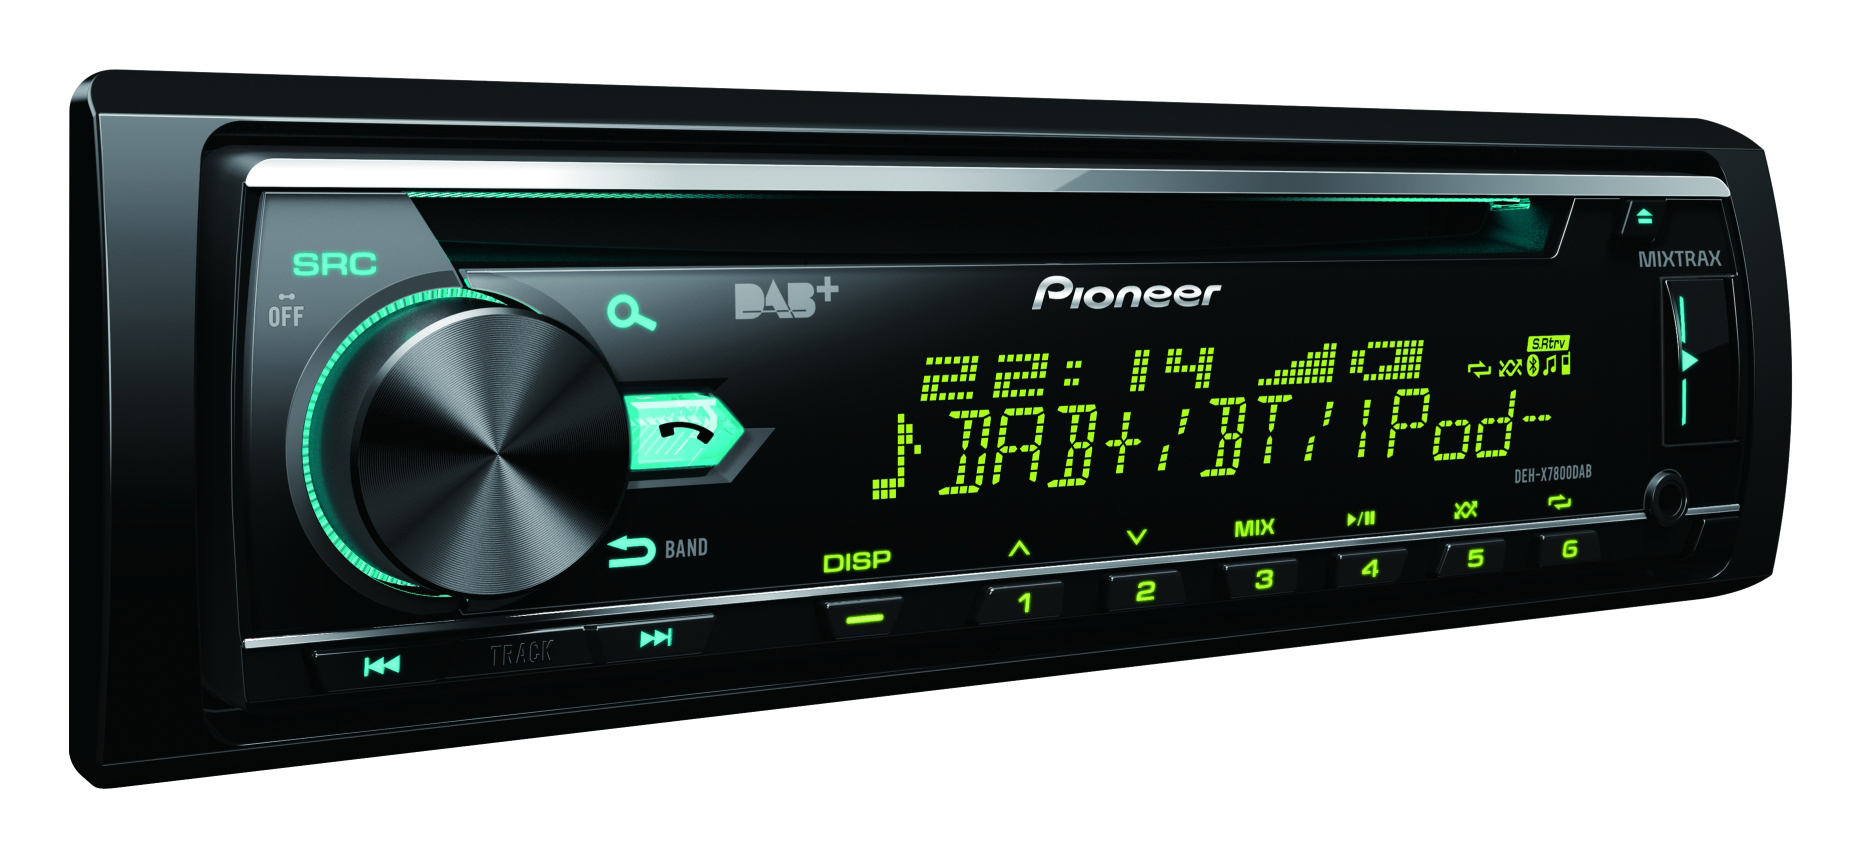 DEH-X7800DAB PIONEER DIN, Watt Autoradio 1 50